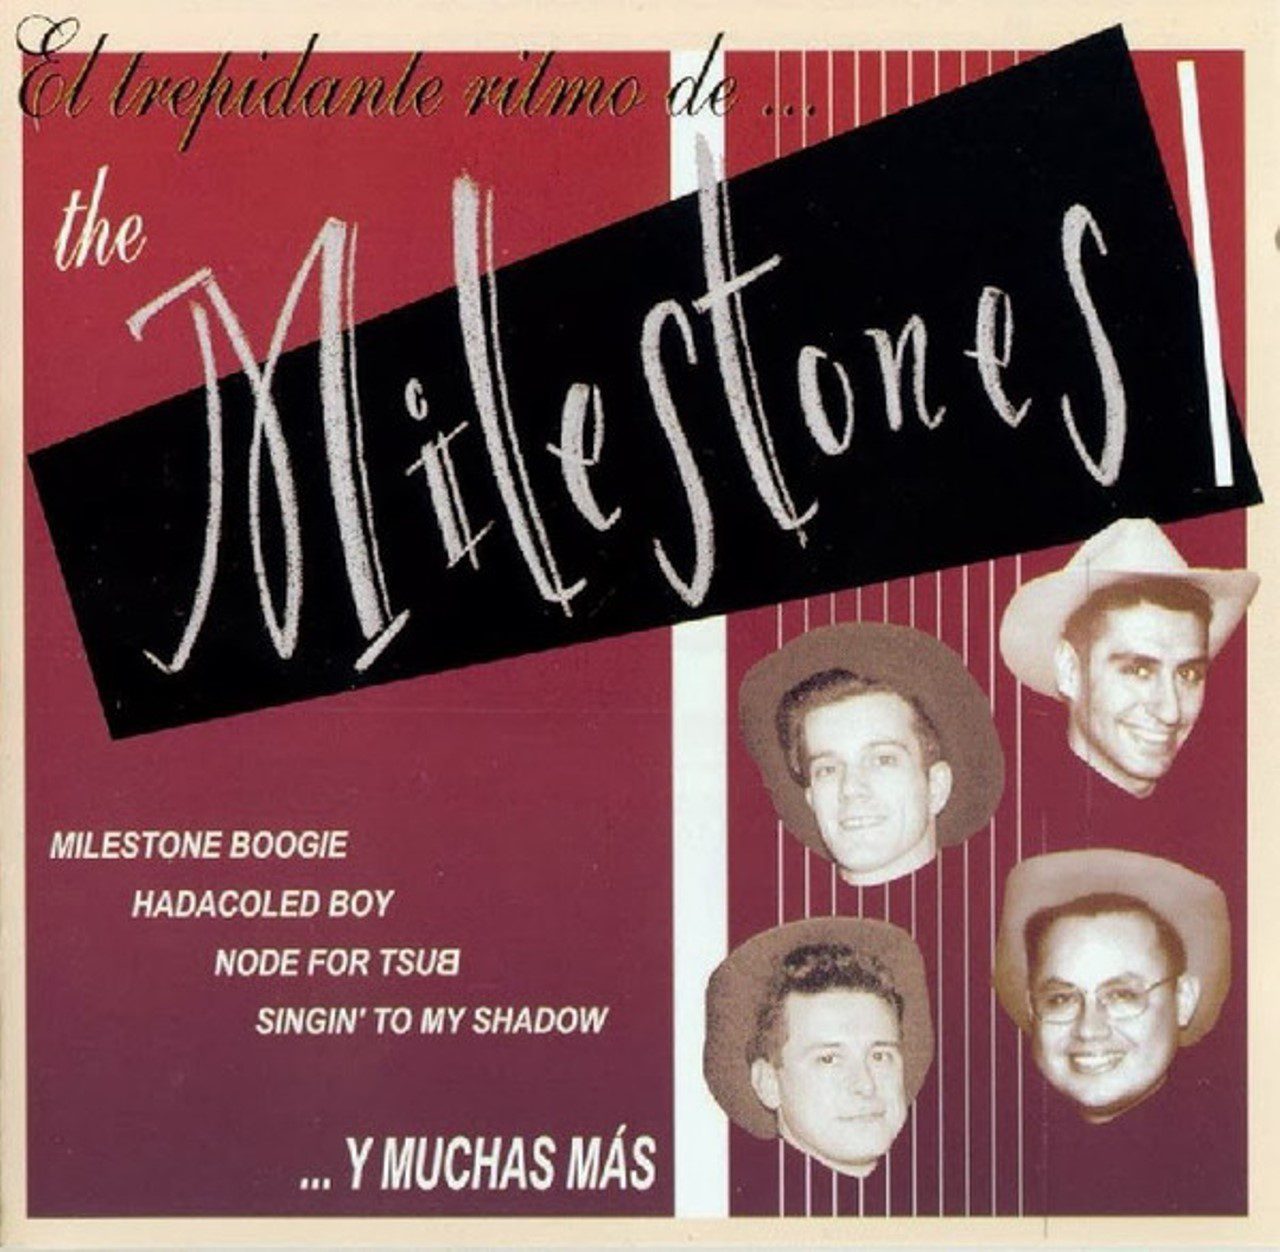 Milestones - El Trepidante Ritmo de… cover album